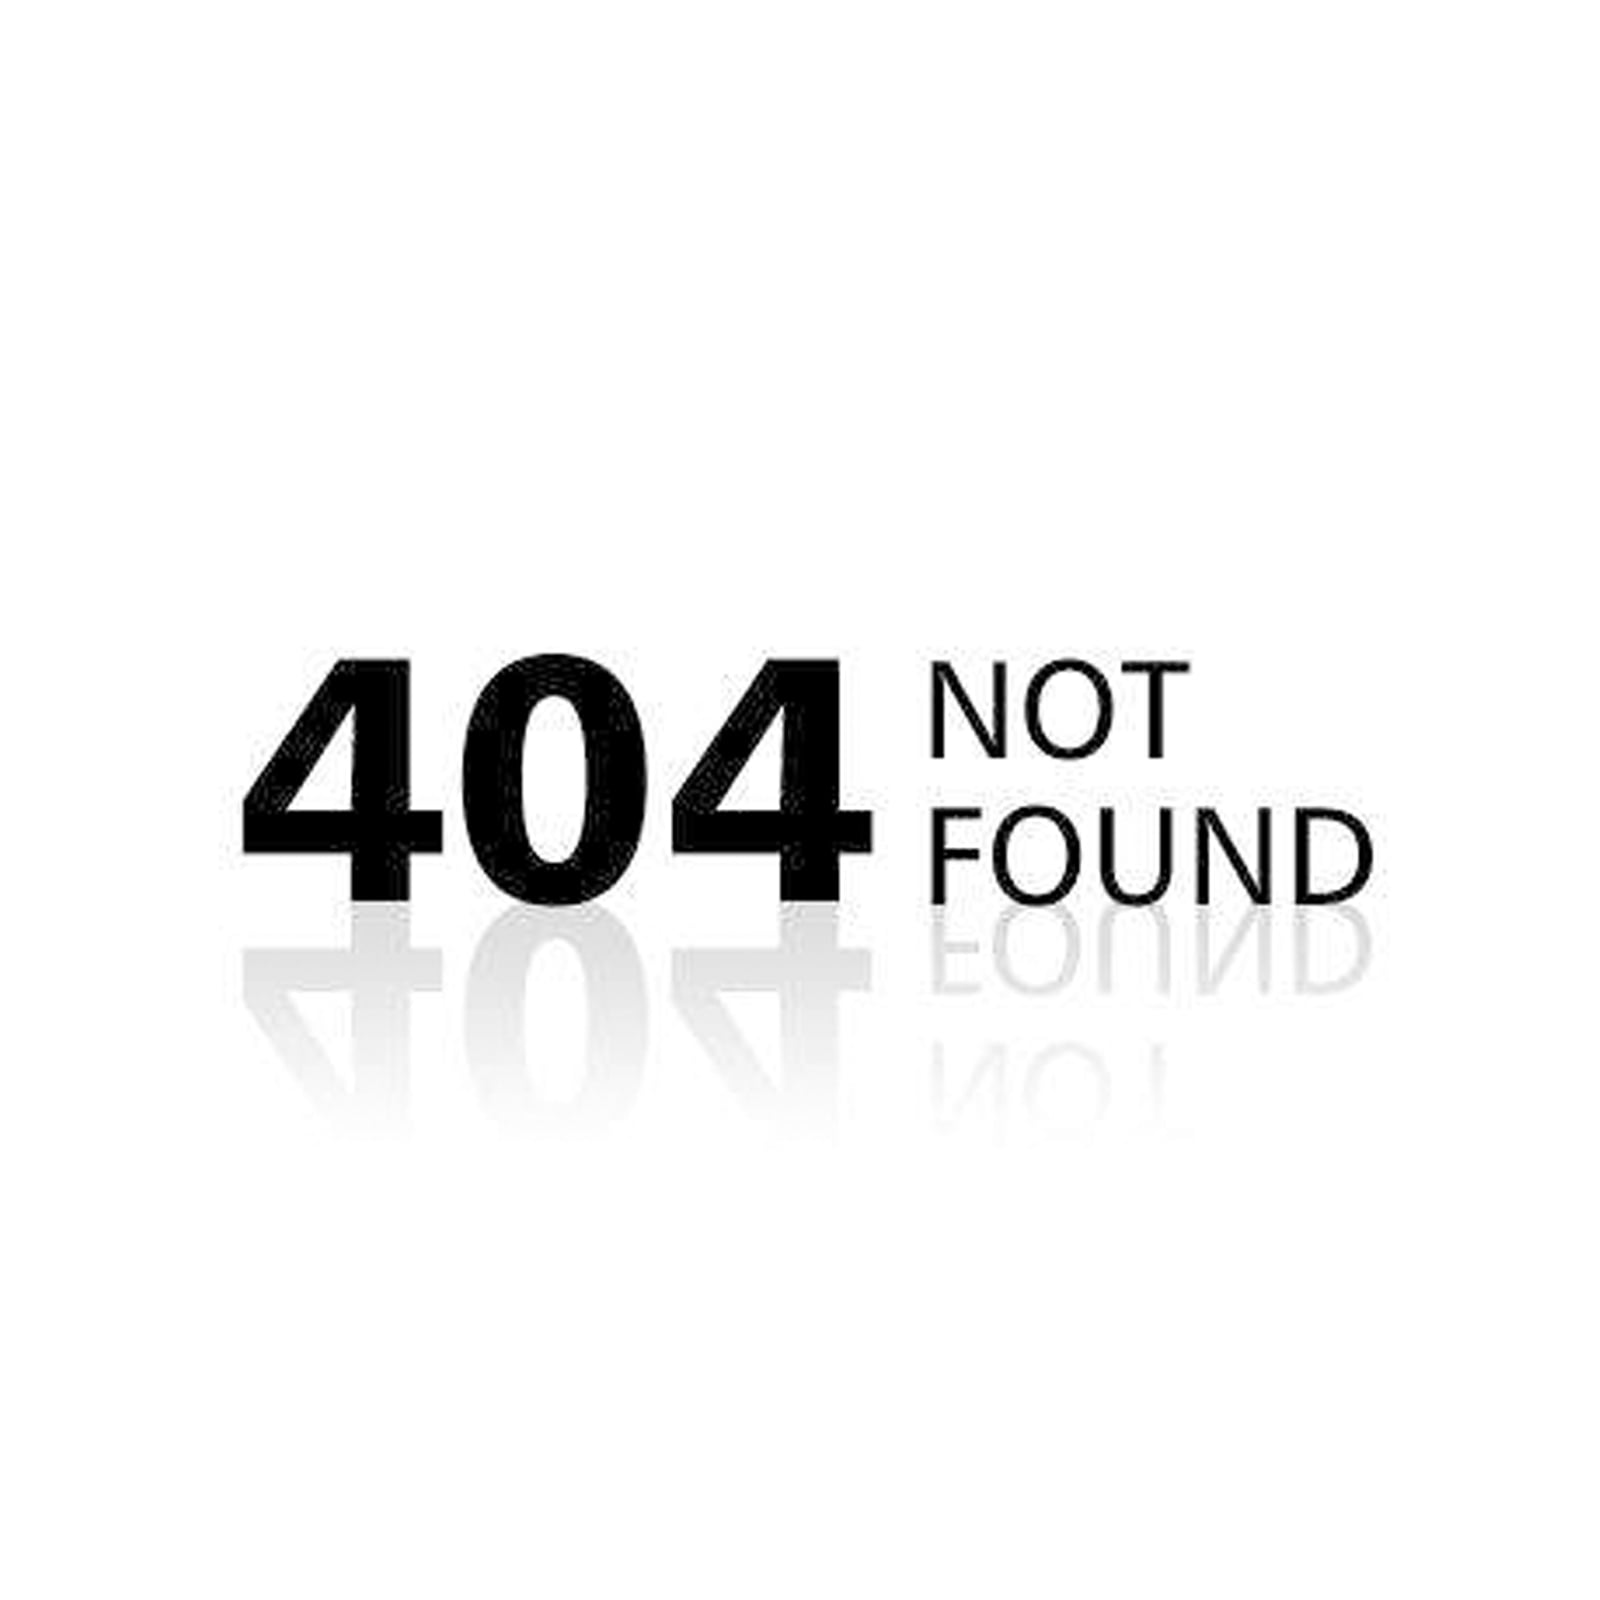 Shop not found. 404 Not found. Логотип 404. 404 Not found картинка. Not found без фона.